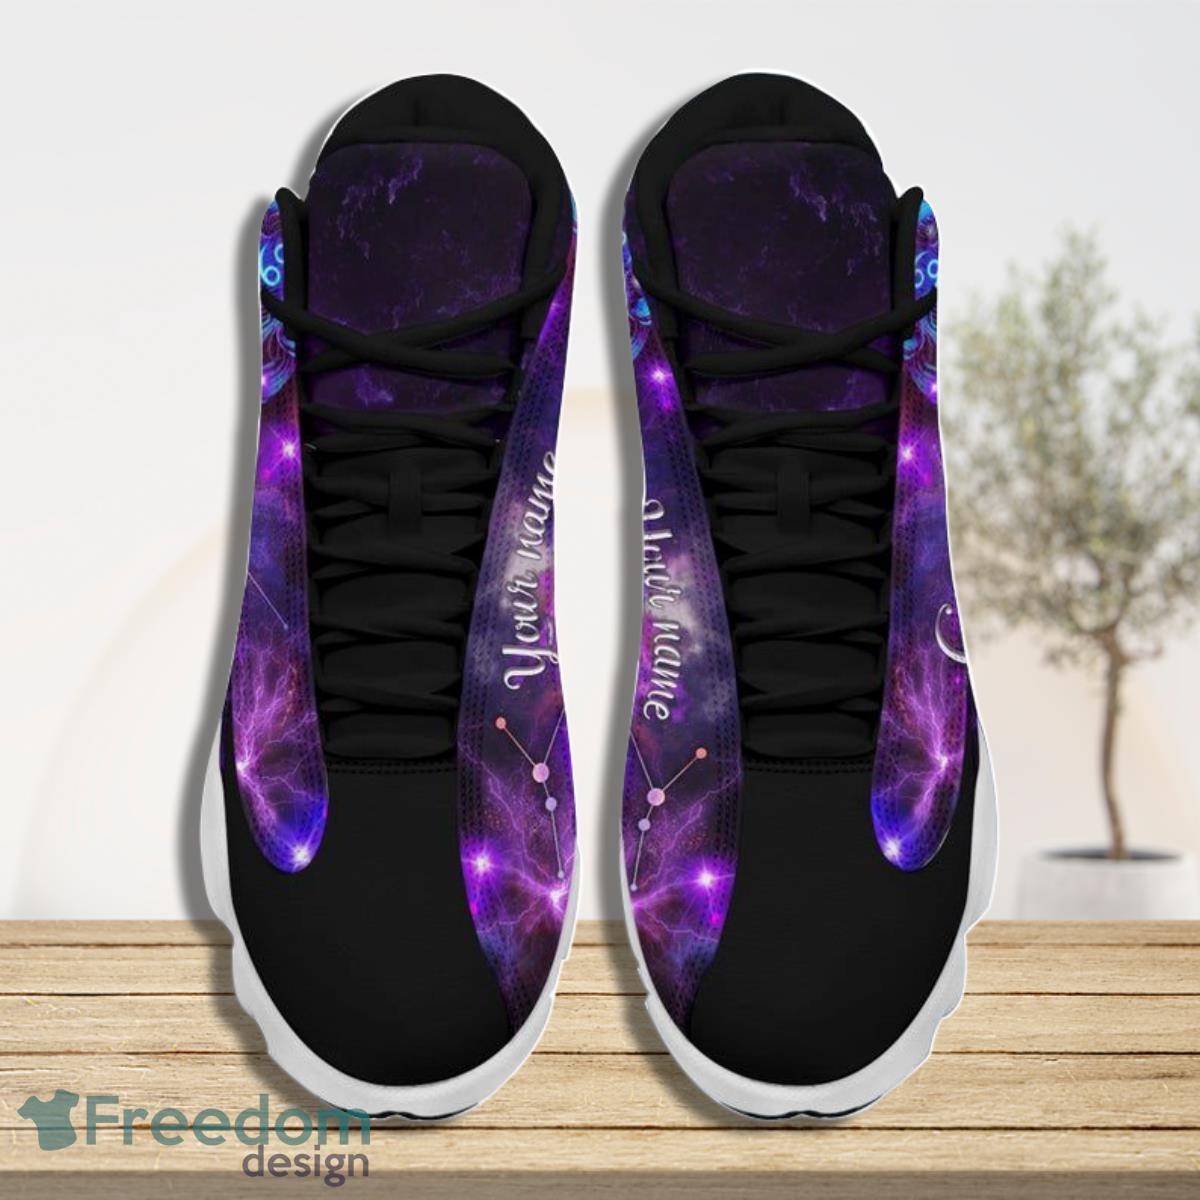 Cancer Dark Galaxy Air Jordan 13 Custom Name Sneakers Best Gift